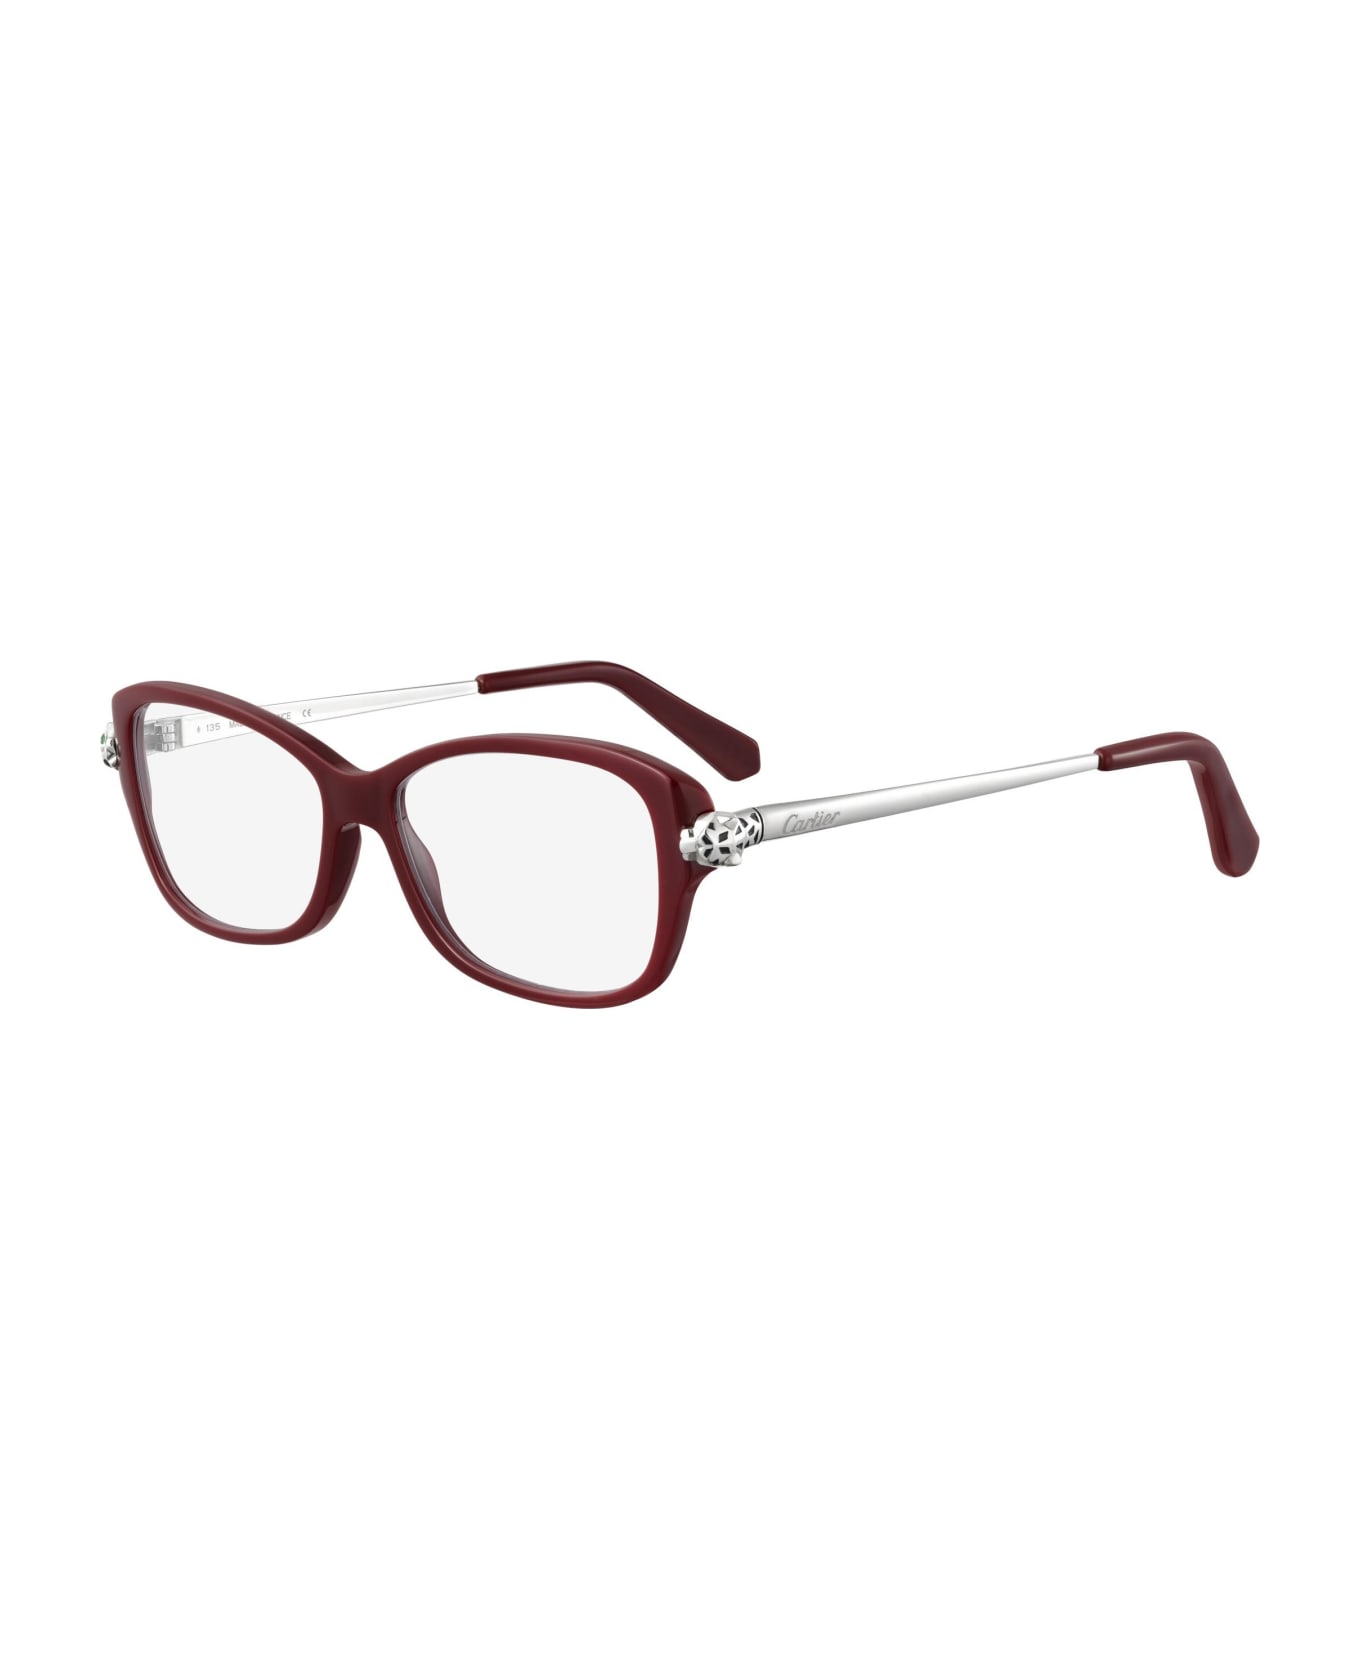 Cartier Eyewear Glasses - Burgundy アイウェア